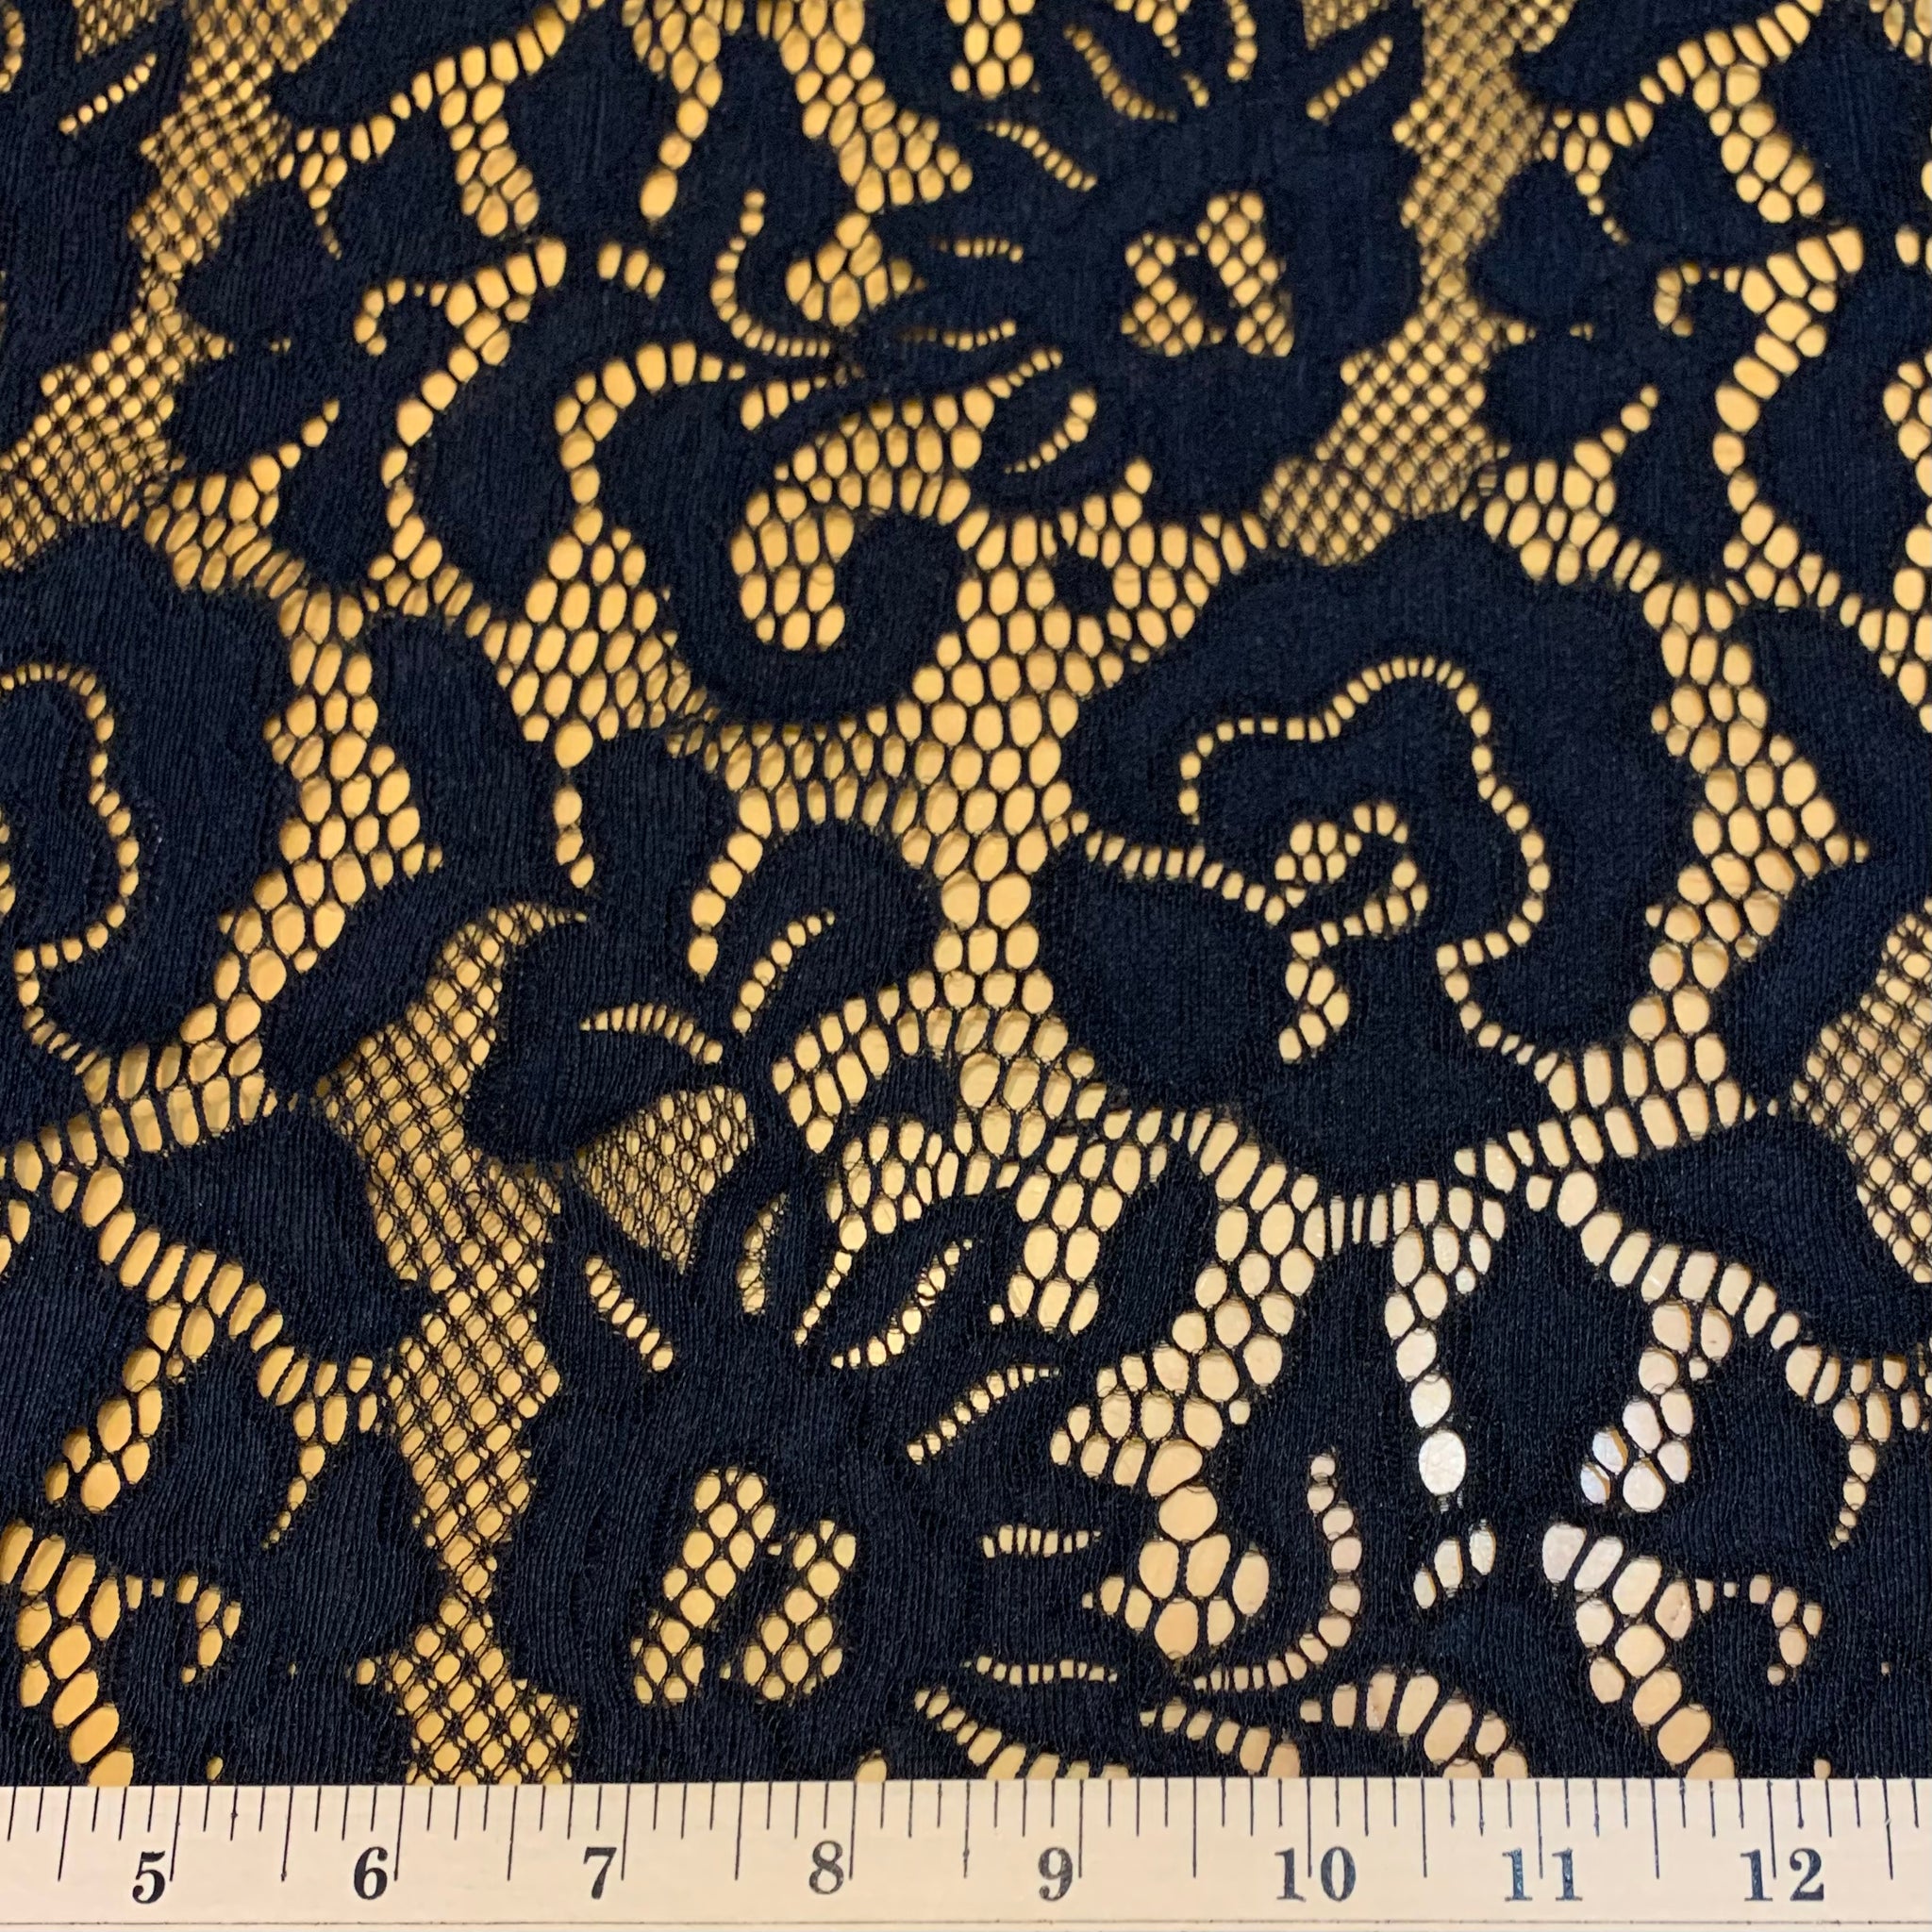 Novelty Polyester Lace Fabric - Black